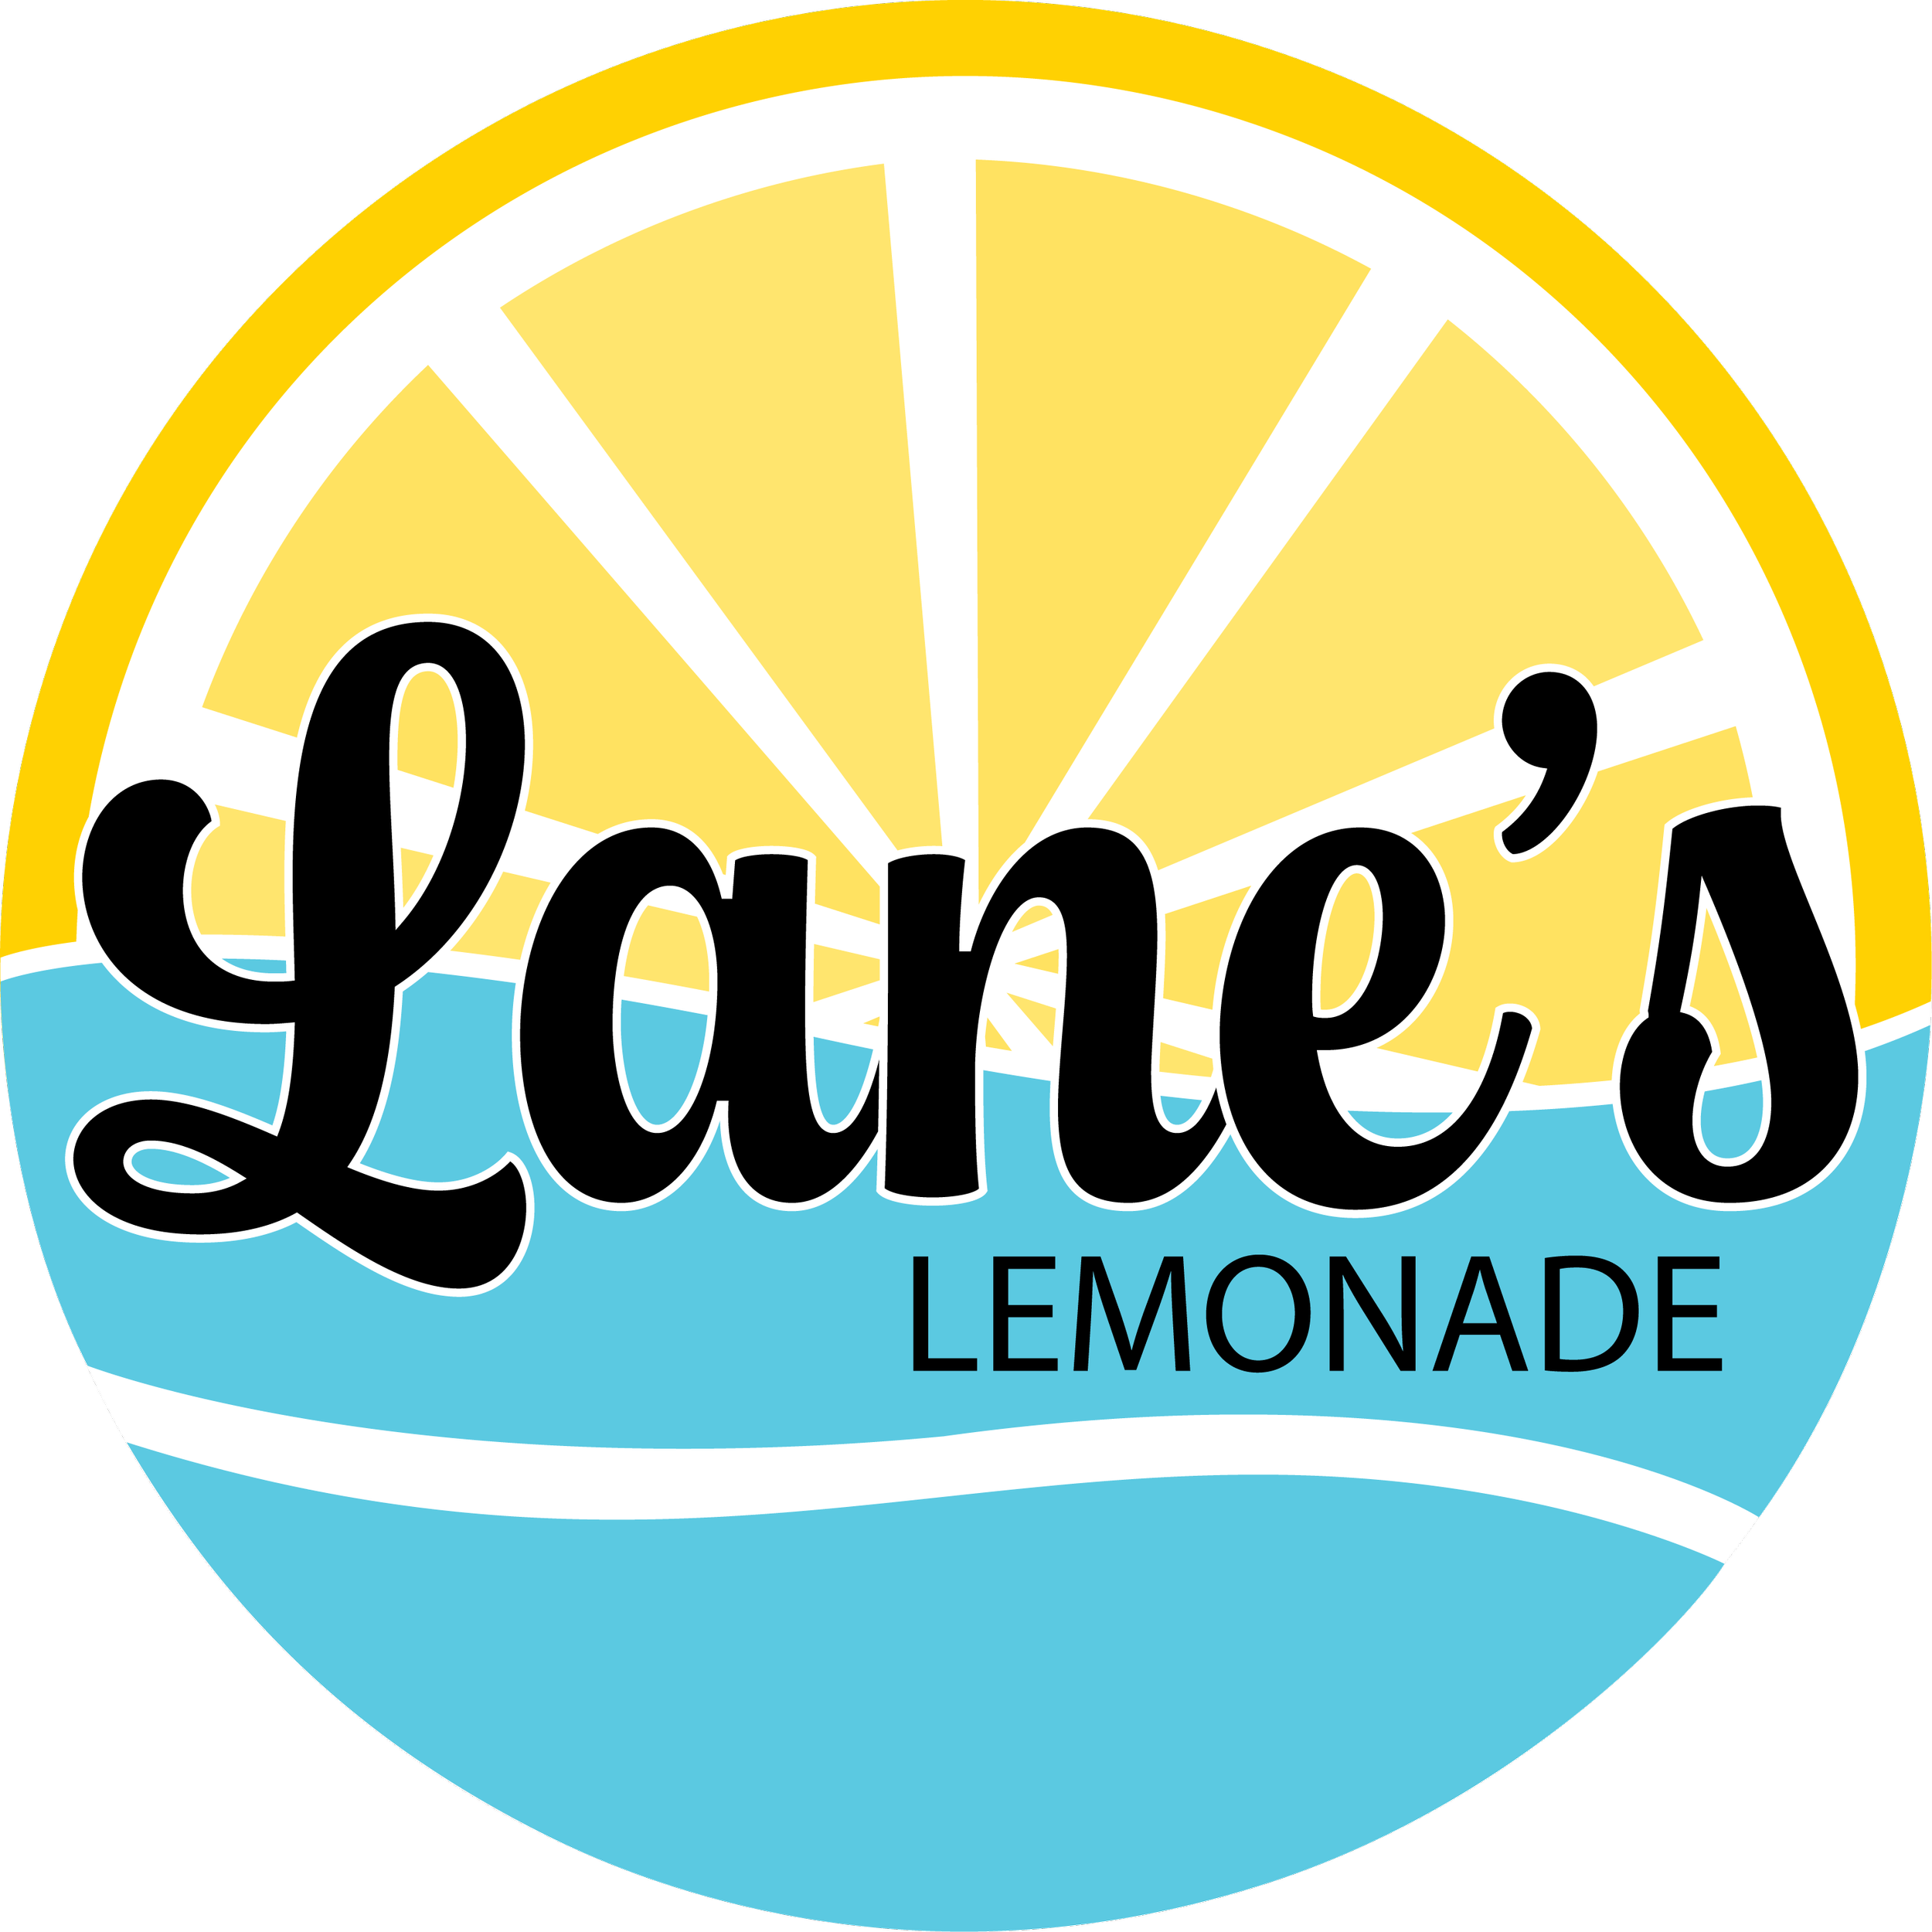 Lane's Lemonade